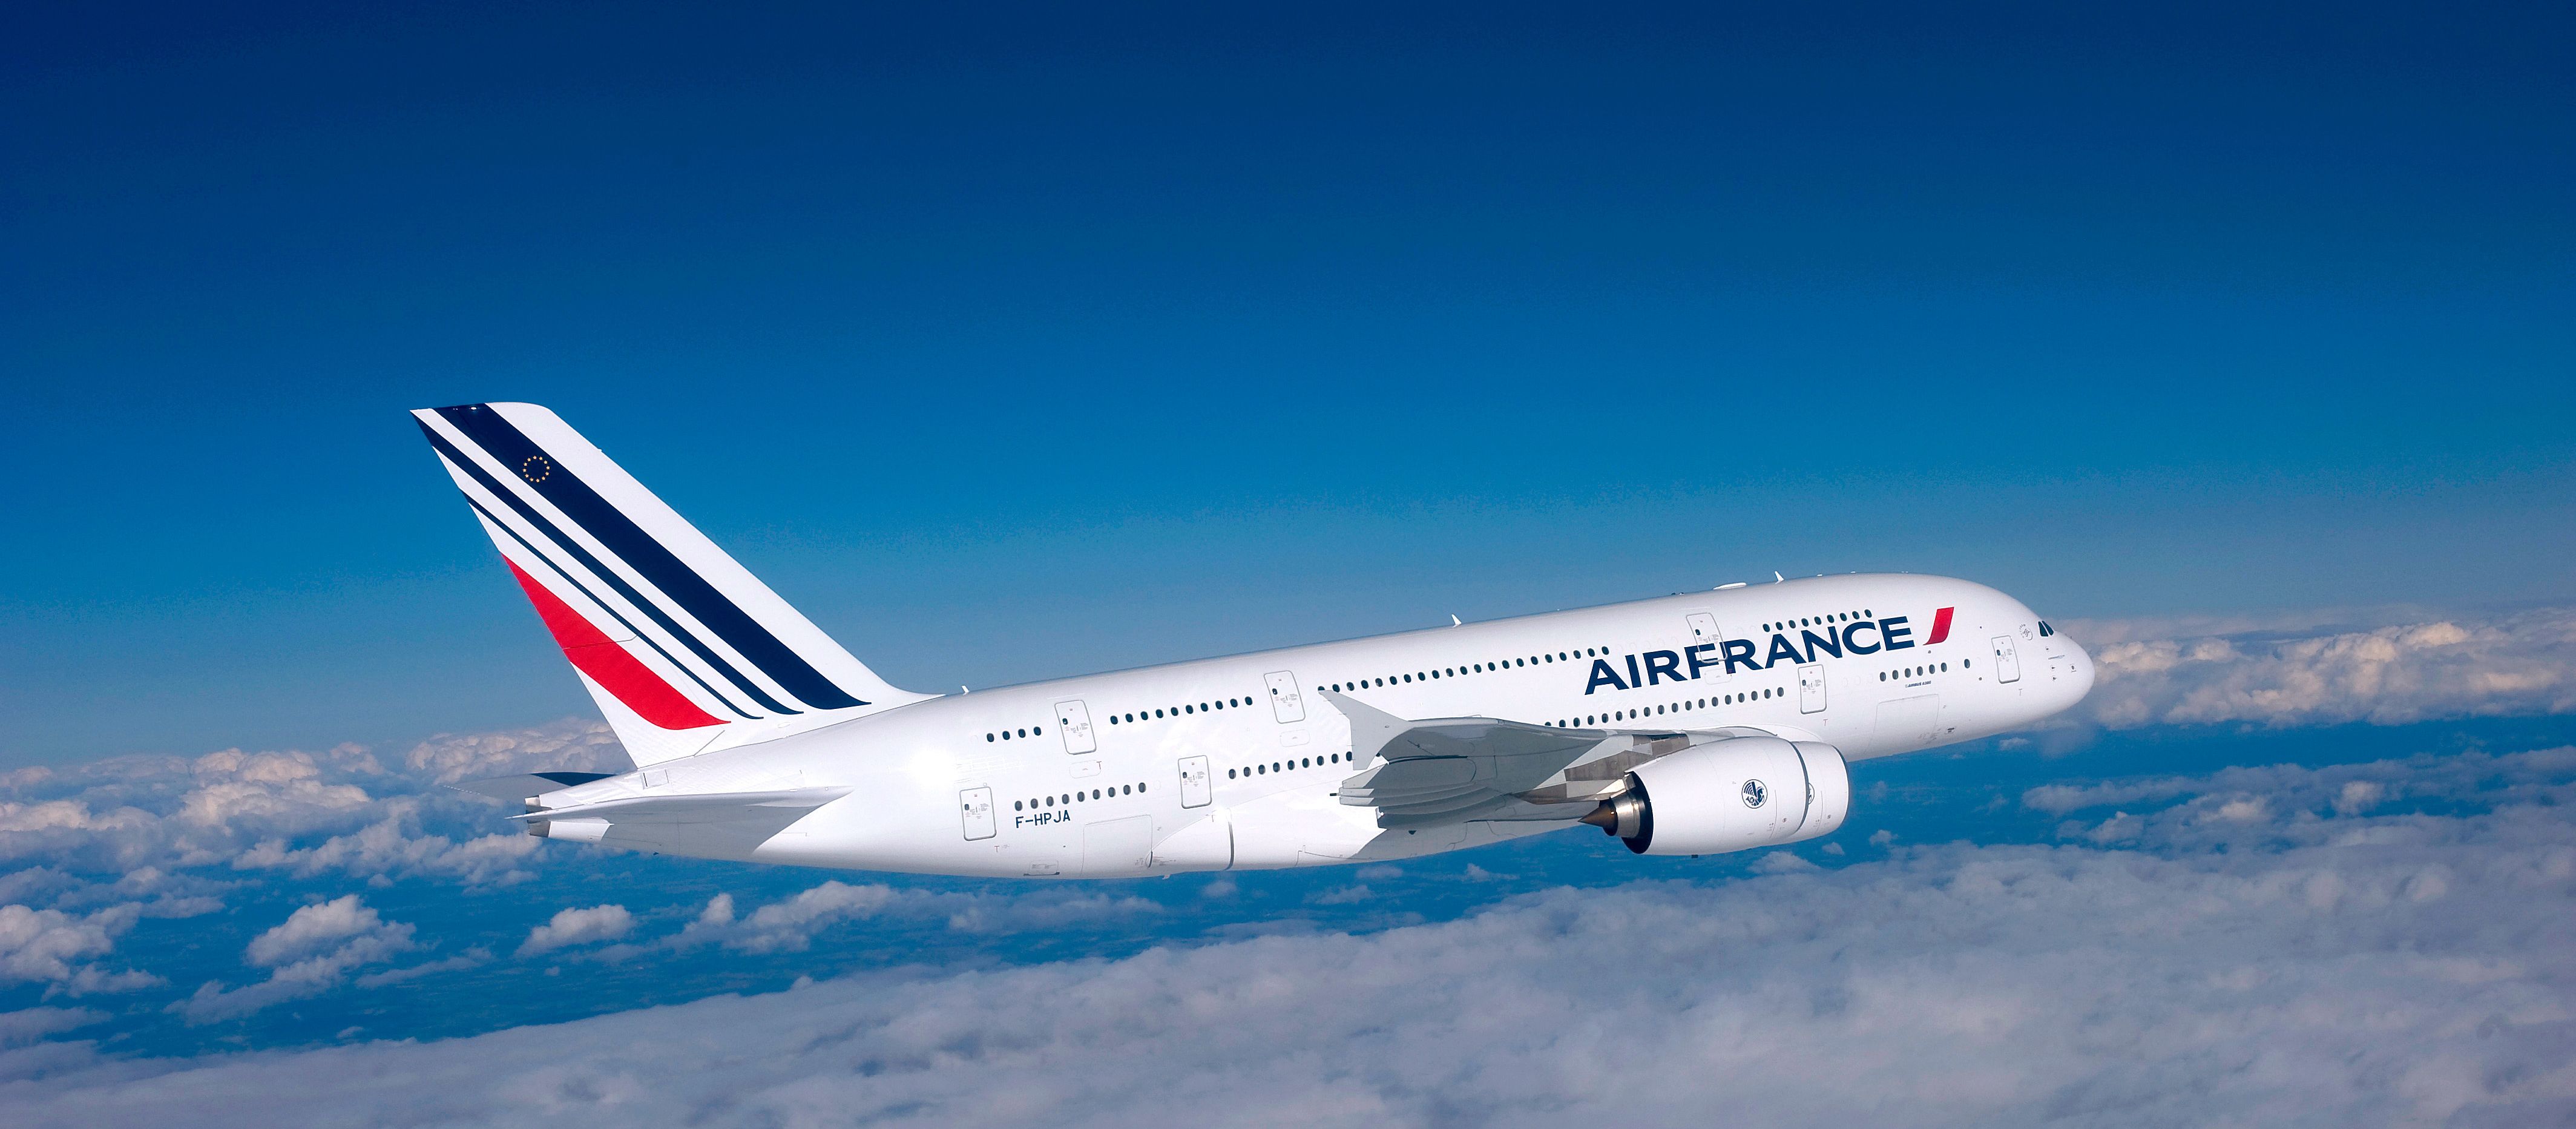 Ein Airbus A380 der Air France Fluggesellschaft